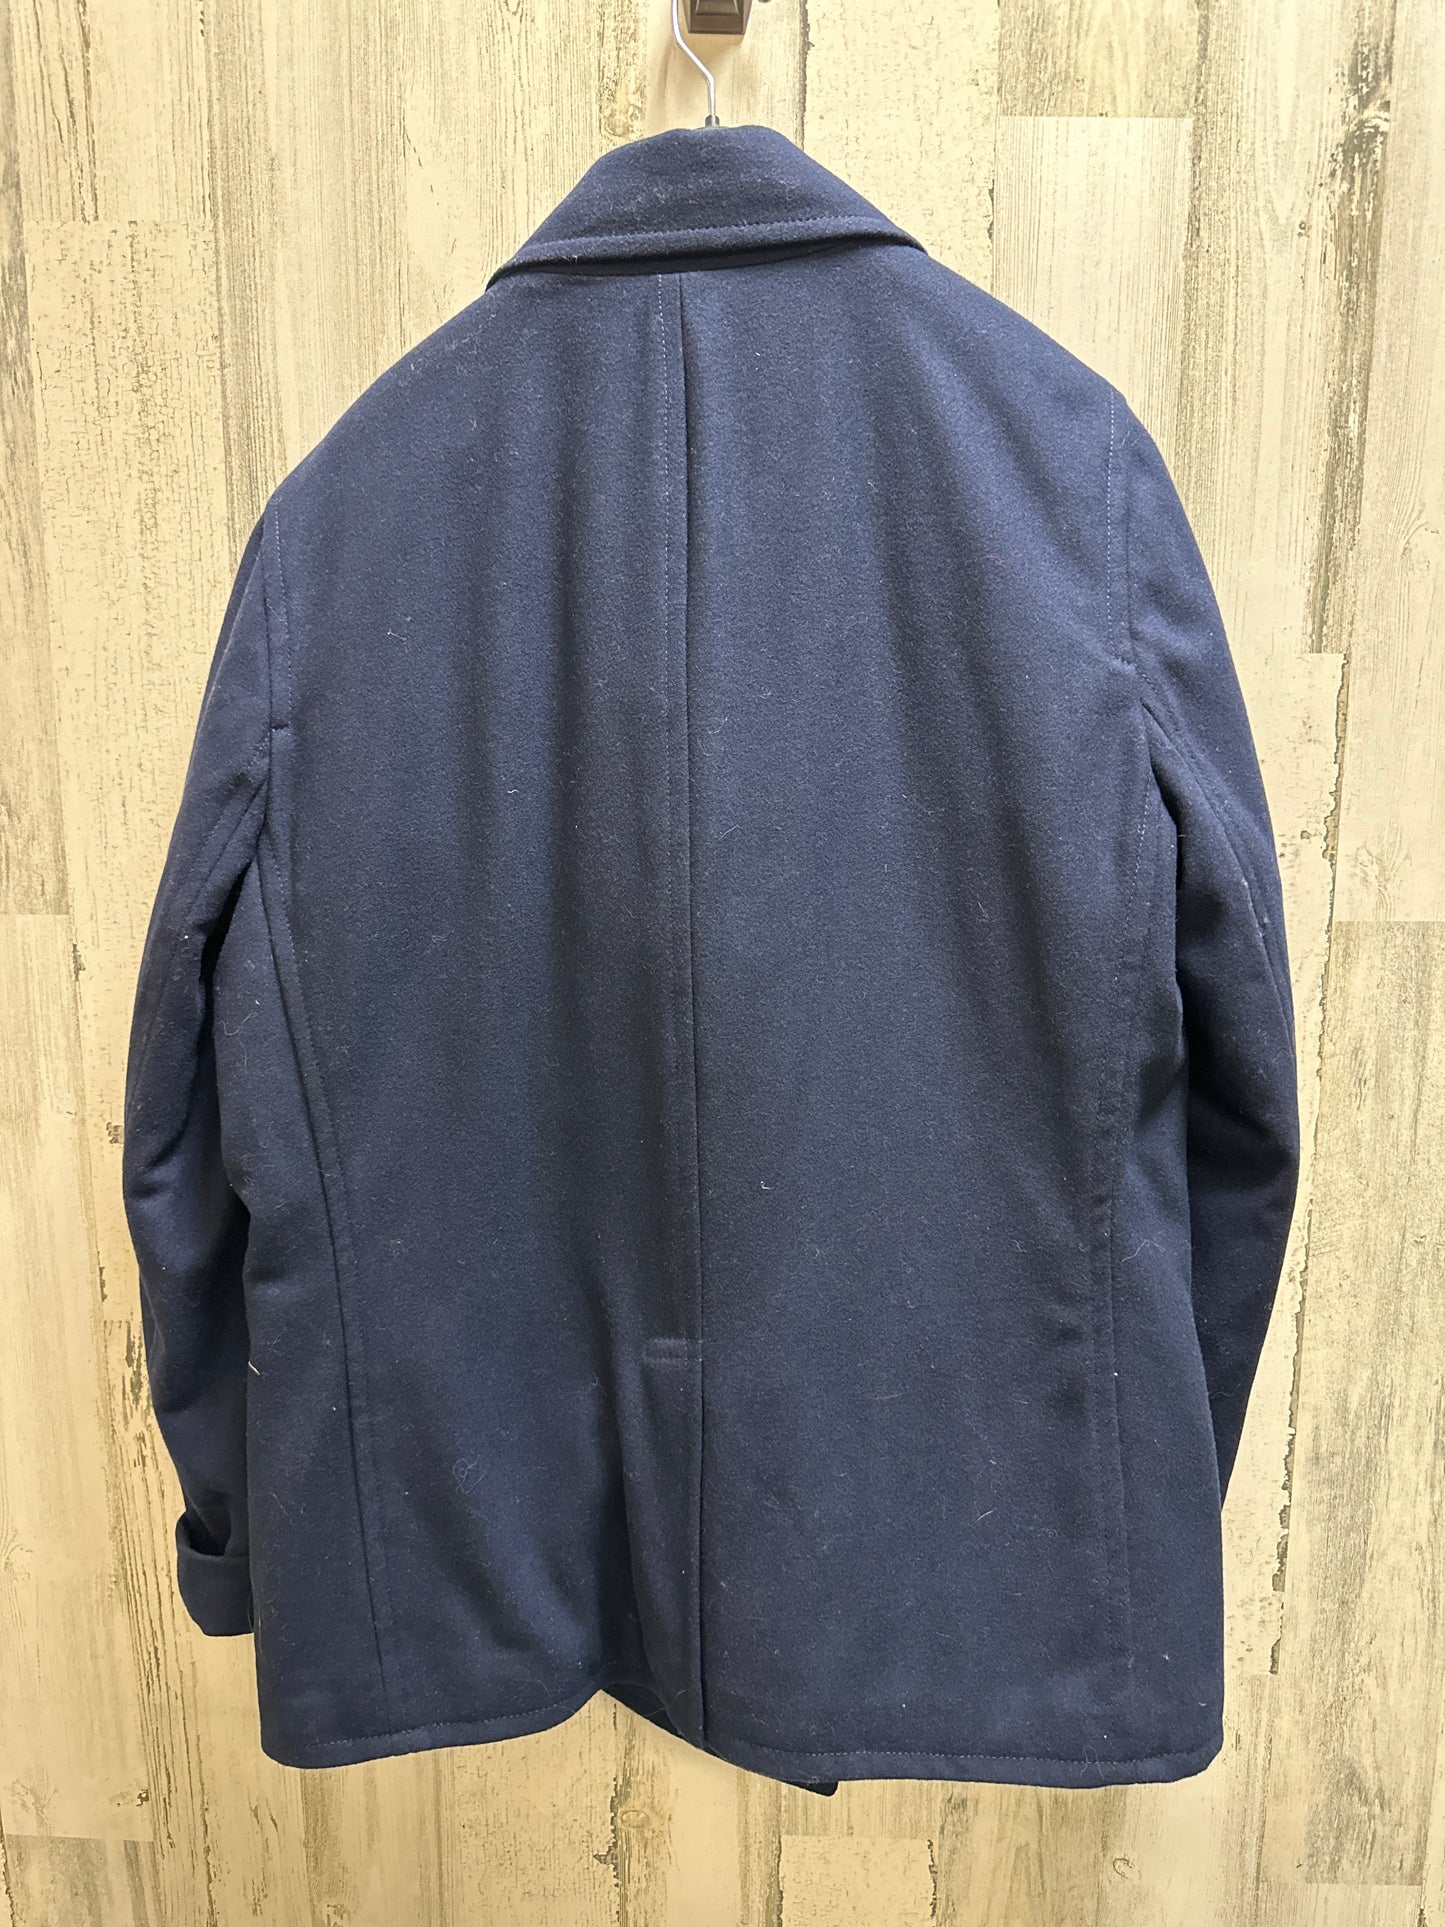 Coat Peacoat By Gap  Size: L